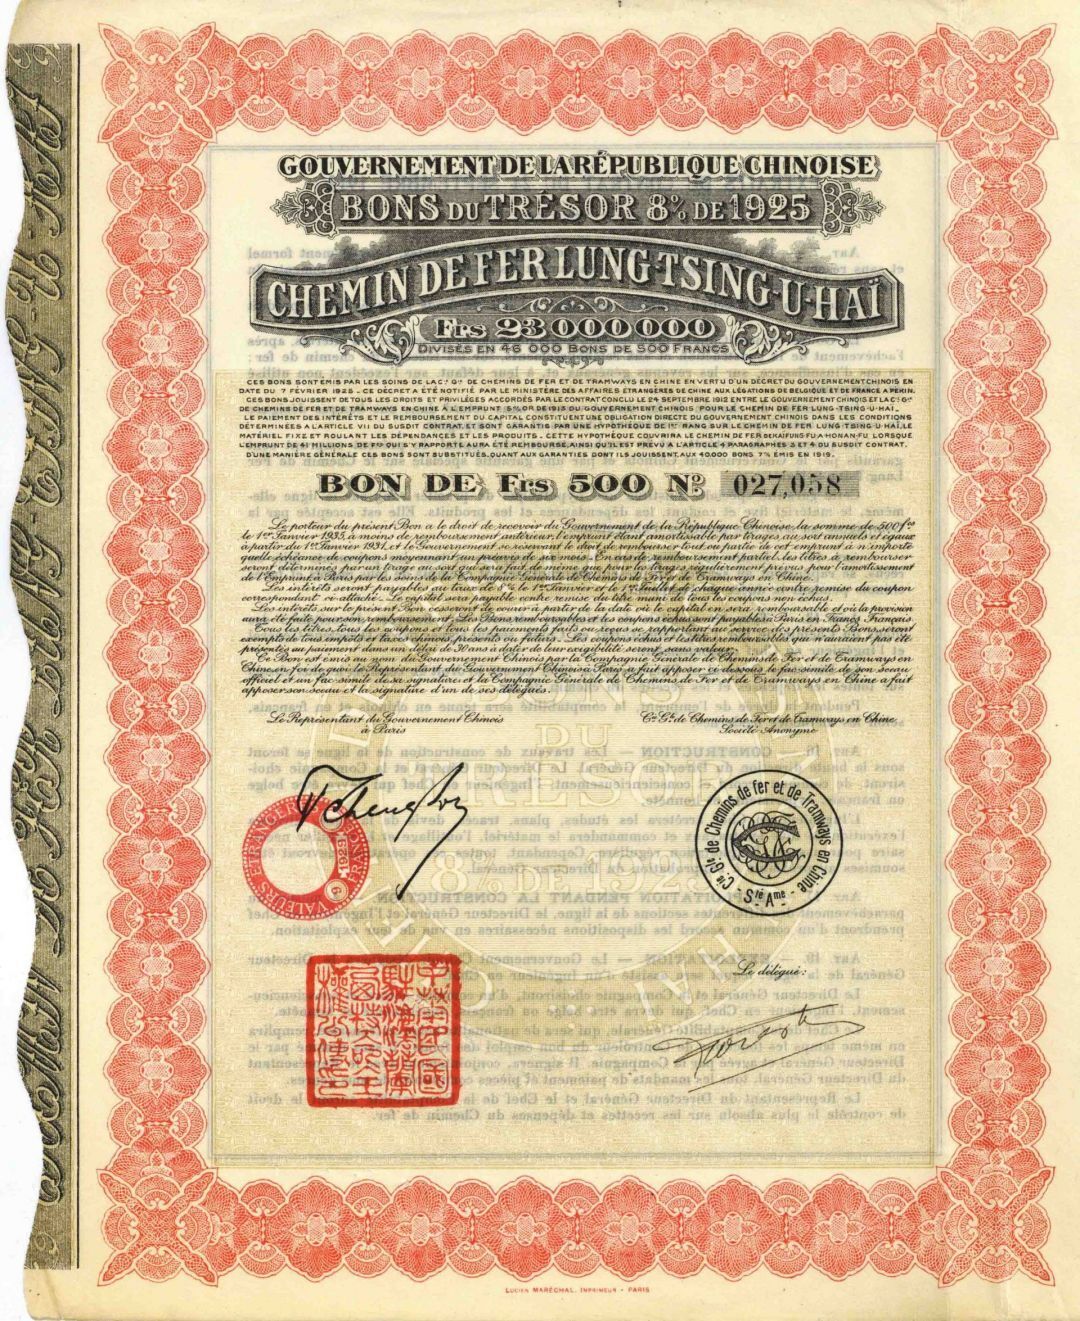 500 Francs Chemin de Fer Lung-Tsing-U-Hai 1925 Bond - Becoming Very Rare (Uncanc